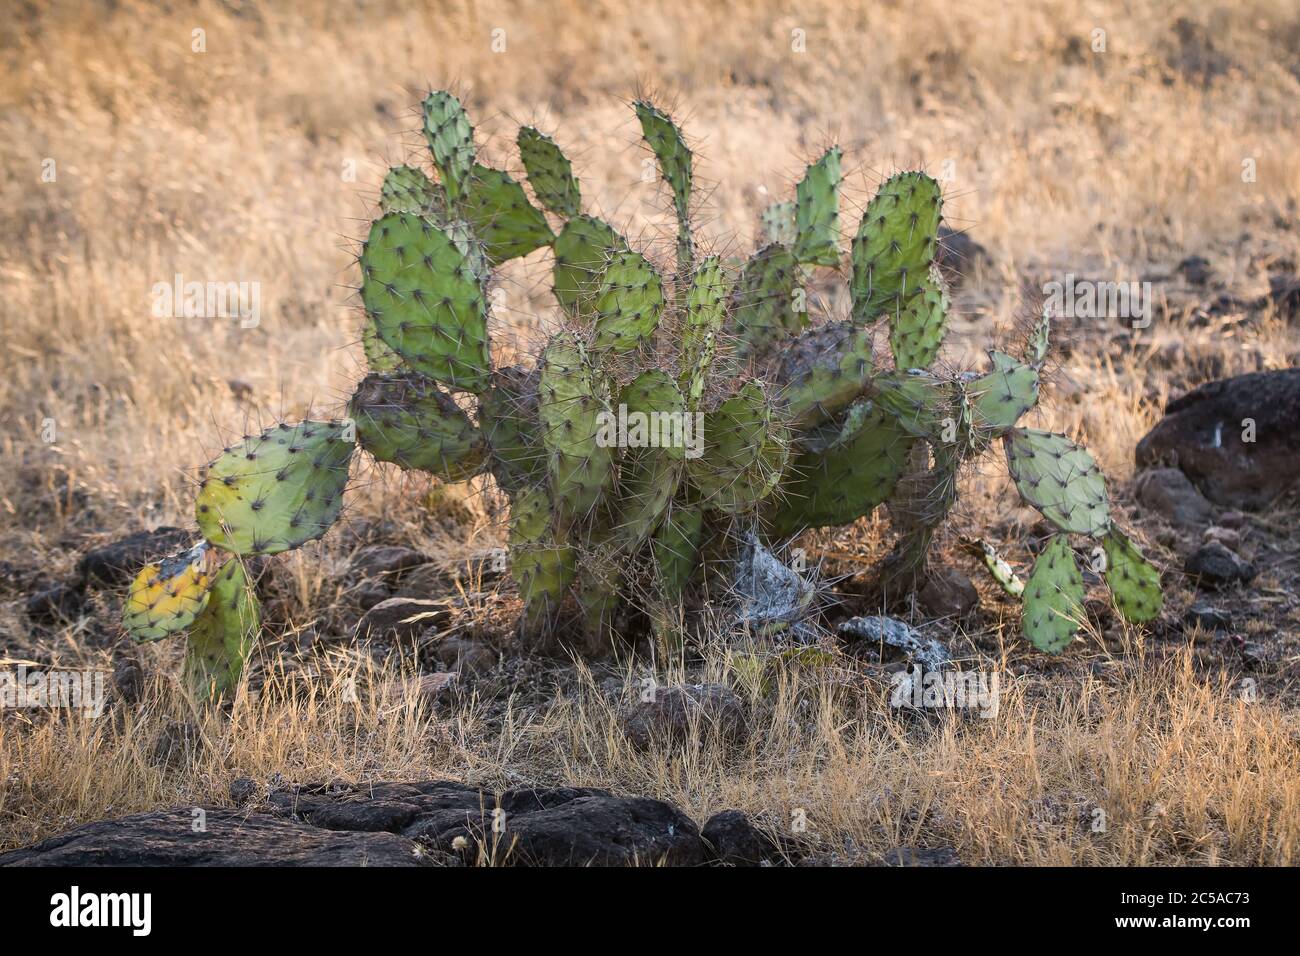 Cactus d'oreille de lapin (Opuntia microdasys, Cactaceae) dans son habitat  Photo Stock - Alamy